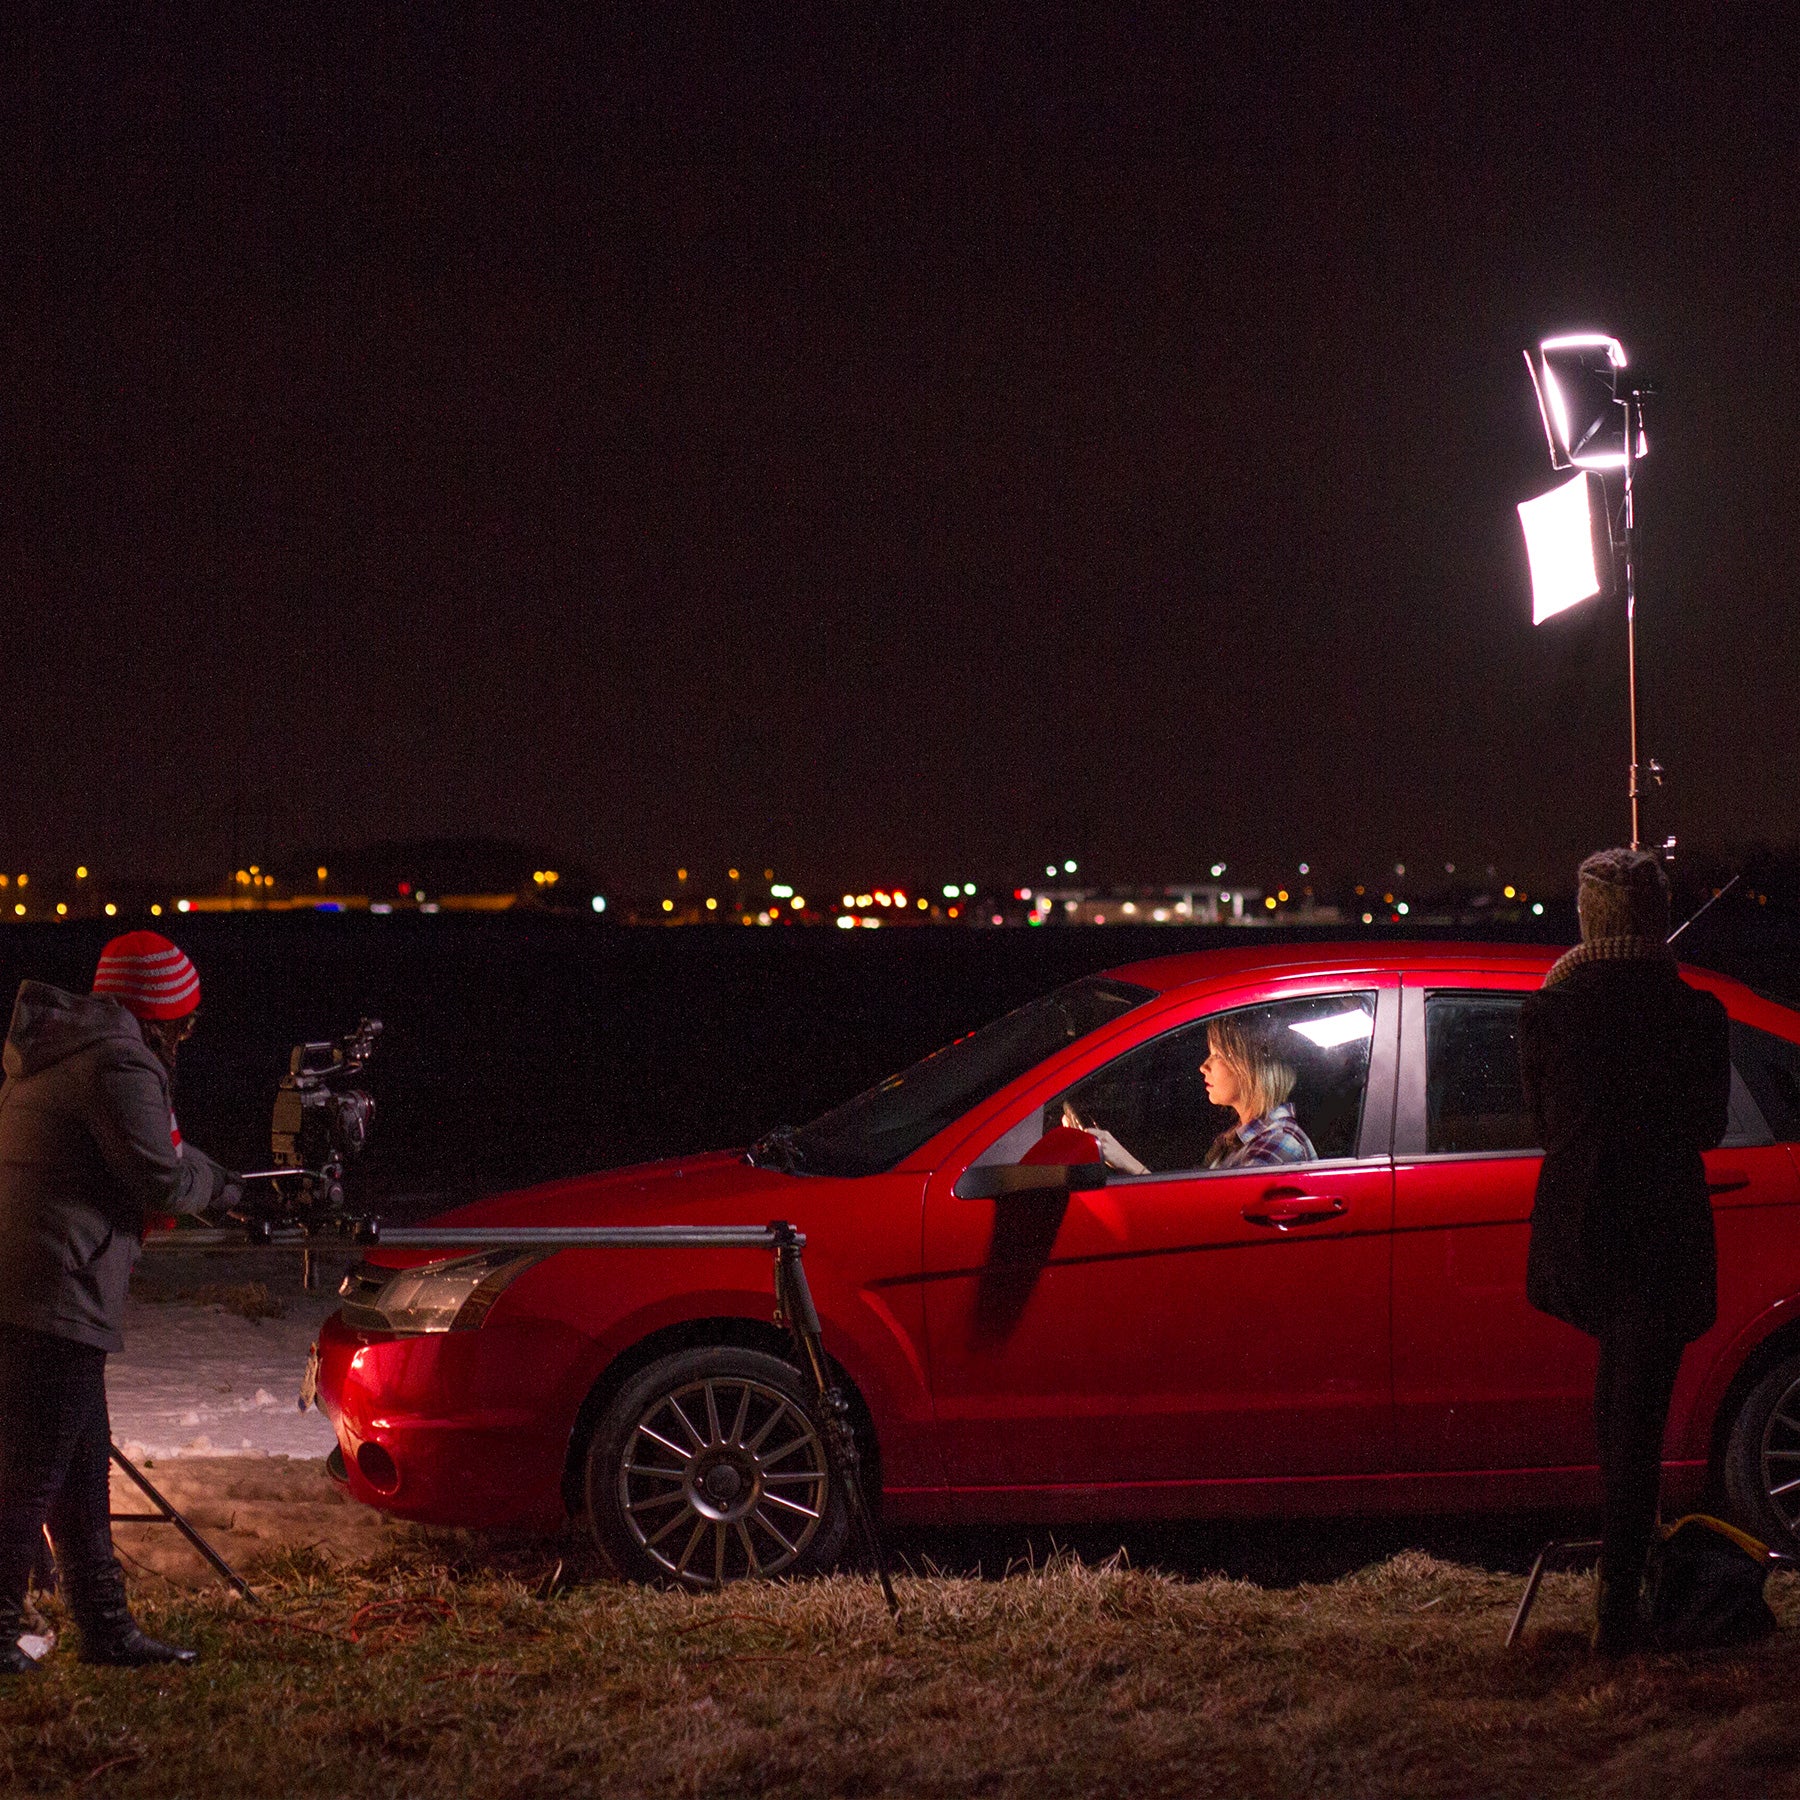 Flex Cine Lighting Car Outdoors in Winter